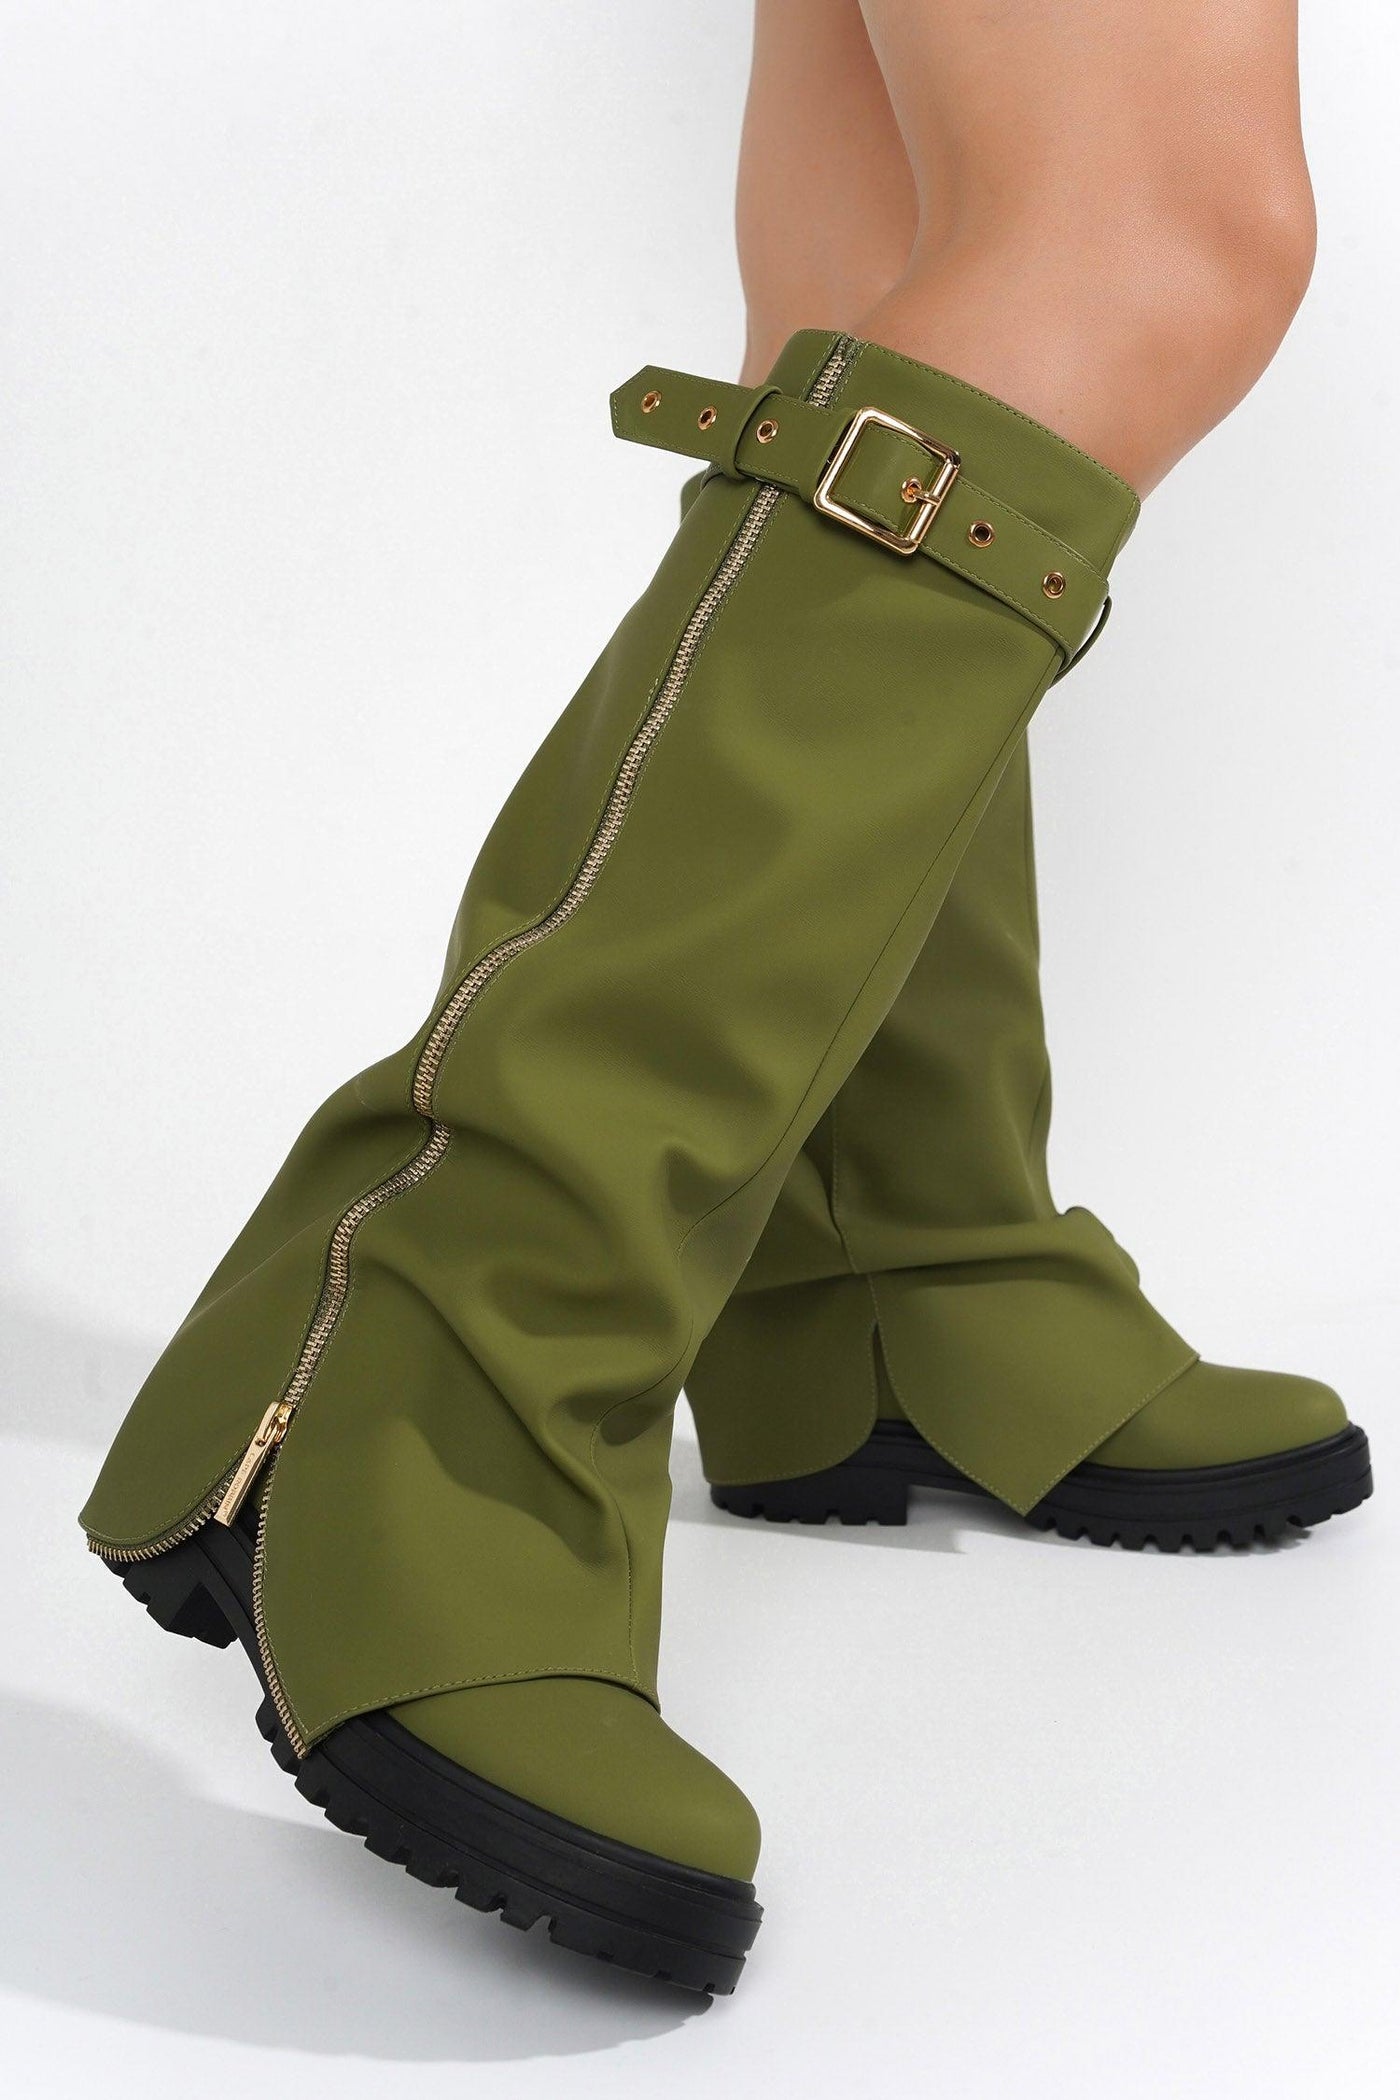 FUNAFUTI - OLIVE Thigh High Boots